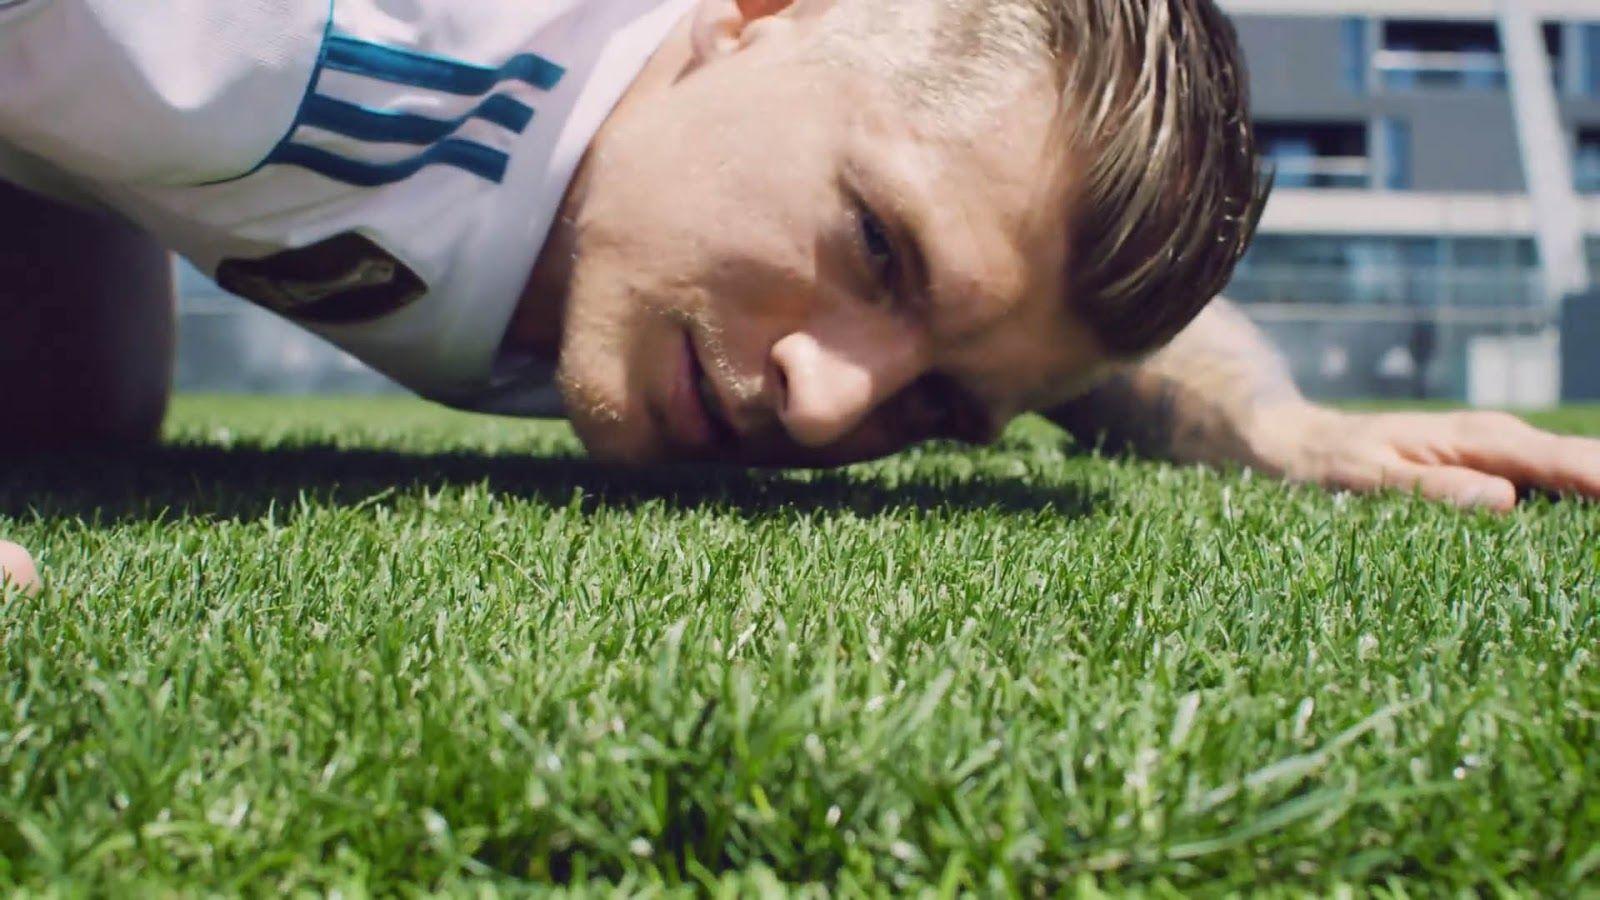 Real Madrid CF Full HQ Image Free Download. Beautiful image HD